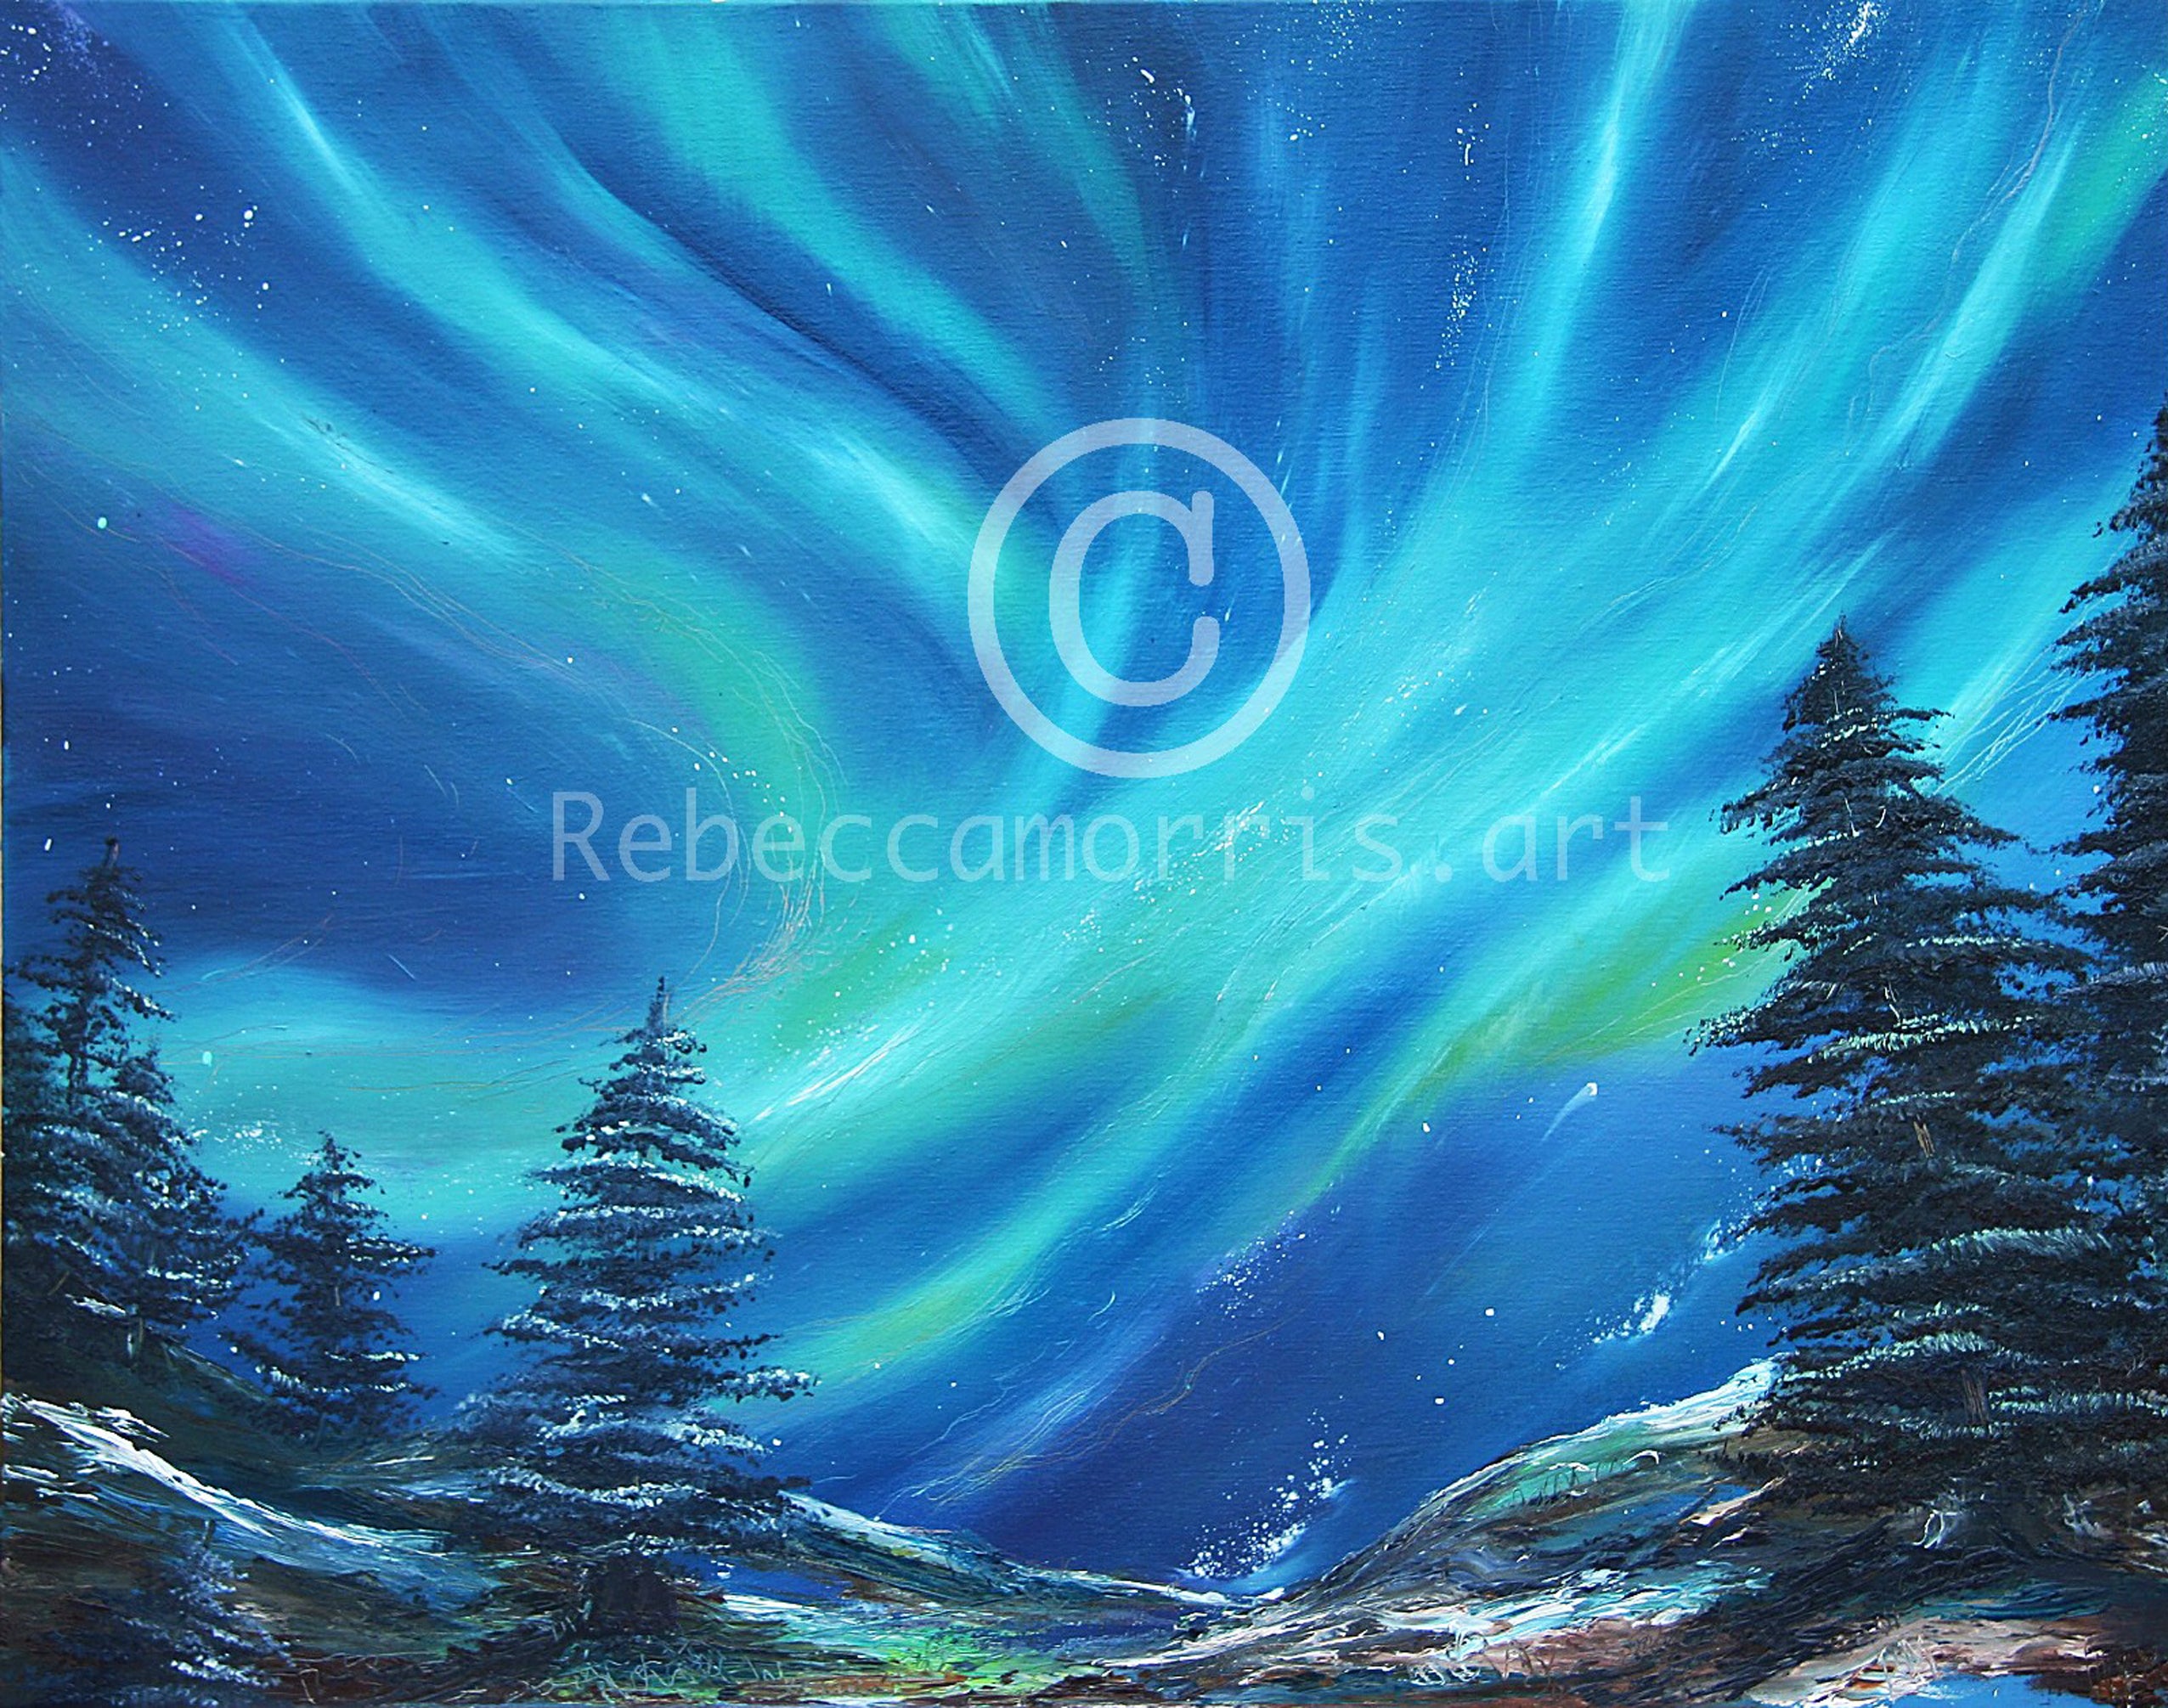 Rebecca Morris Art - Northern Lights With Wisdom